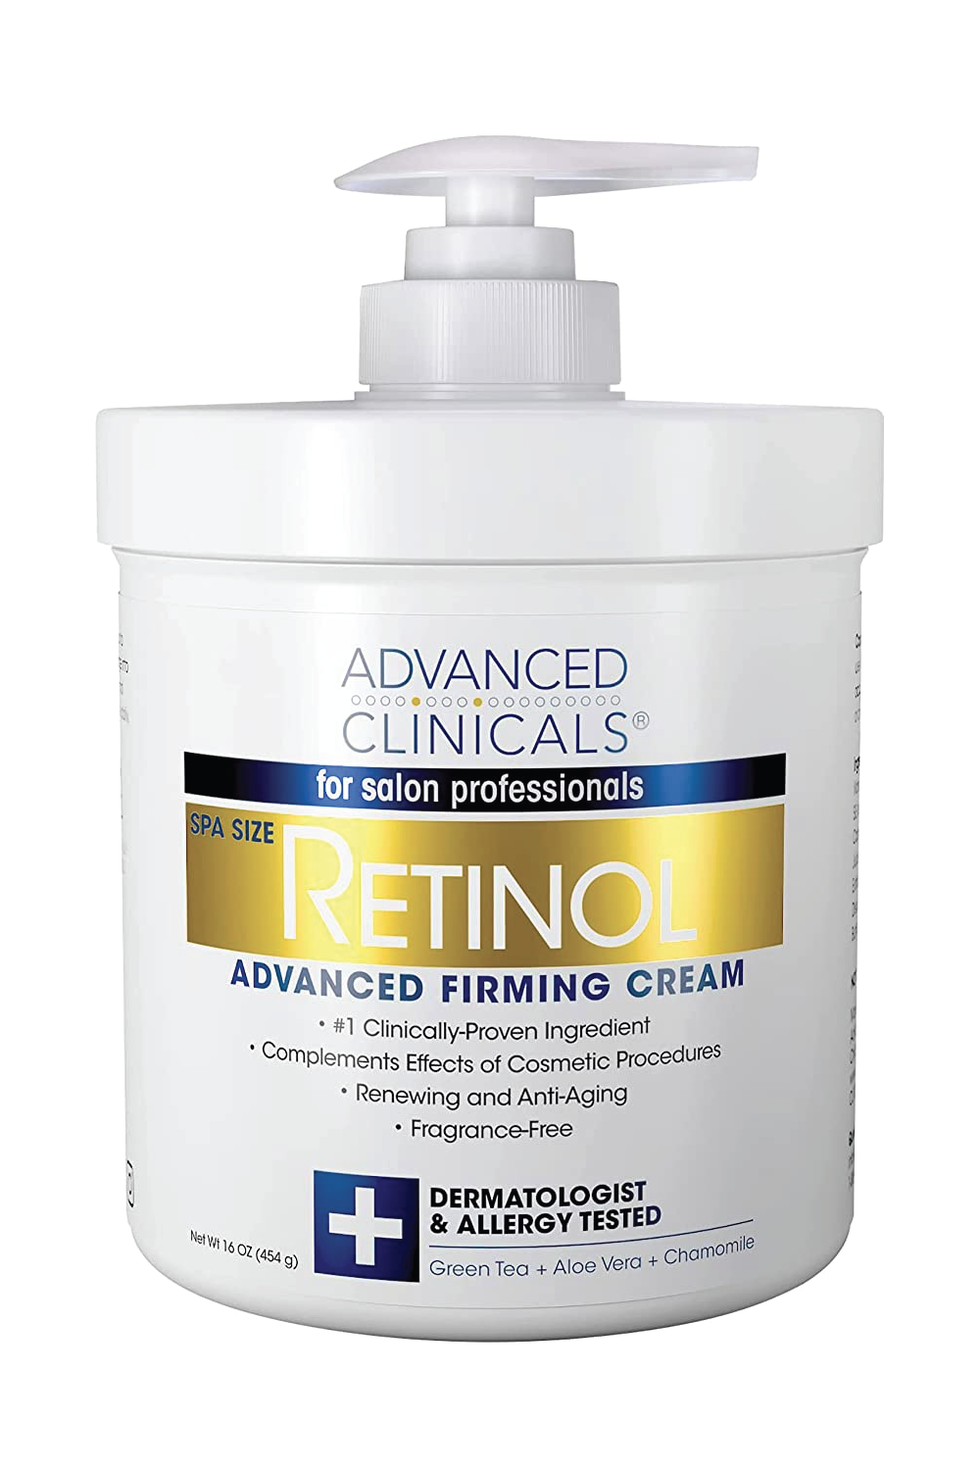 Retinol Body Lotion Moisturizer Face & Body Cream & Crepey Skin Care Treatment, Anti Aging Retinol Cream Targets Appearance Of Wrinkles, Sagging Skin, & Sun Damaged Skin, 16 Oz